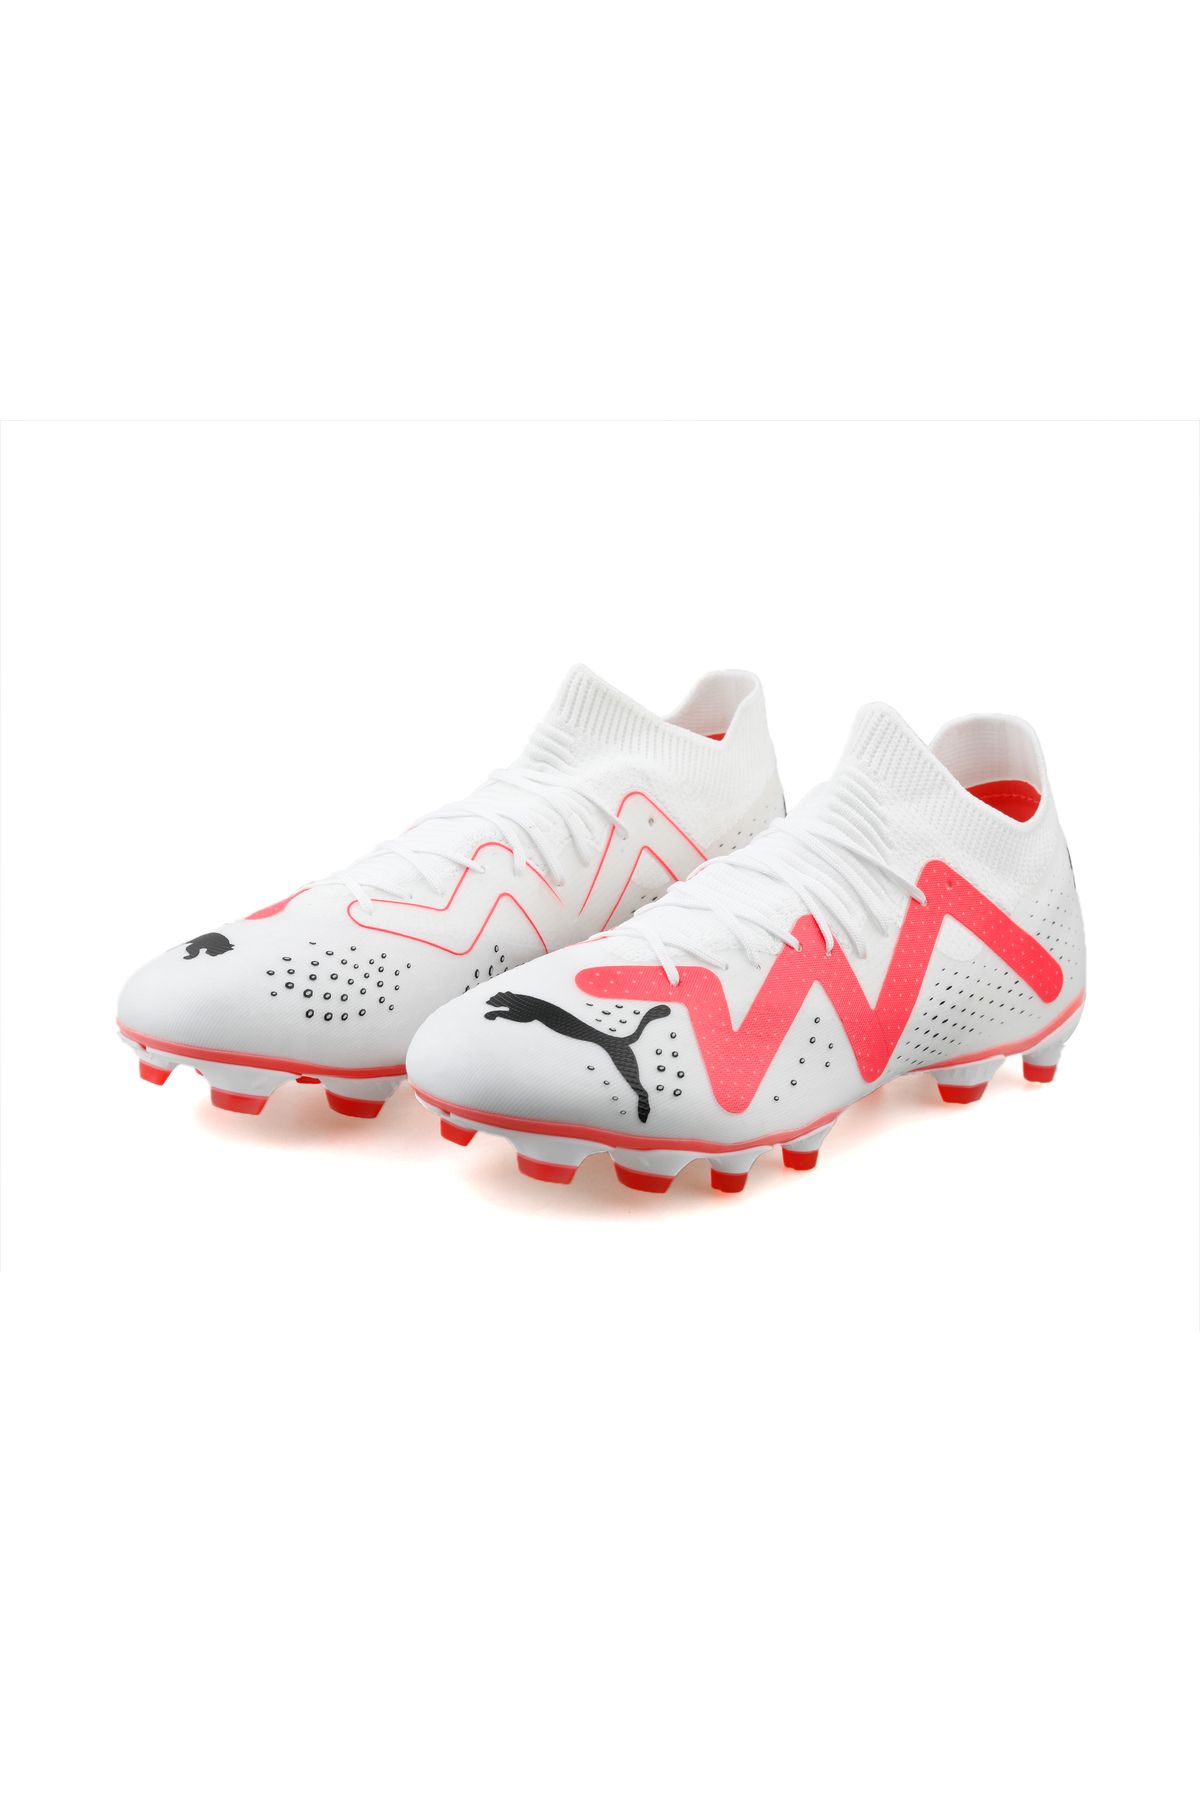 Puma Future Match Fg/Ag Erkek Futbol Ayakkabısı Çim Zemin Kramponu Beyaz